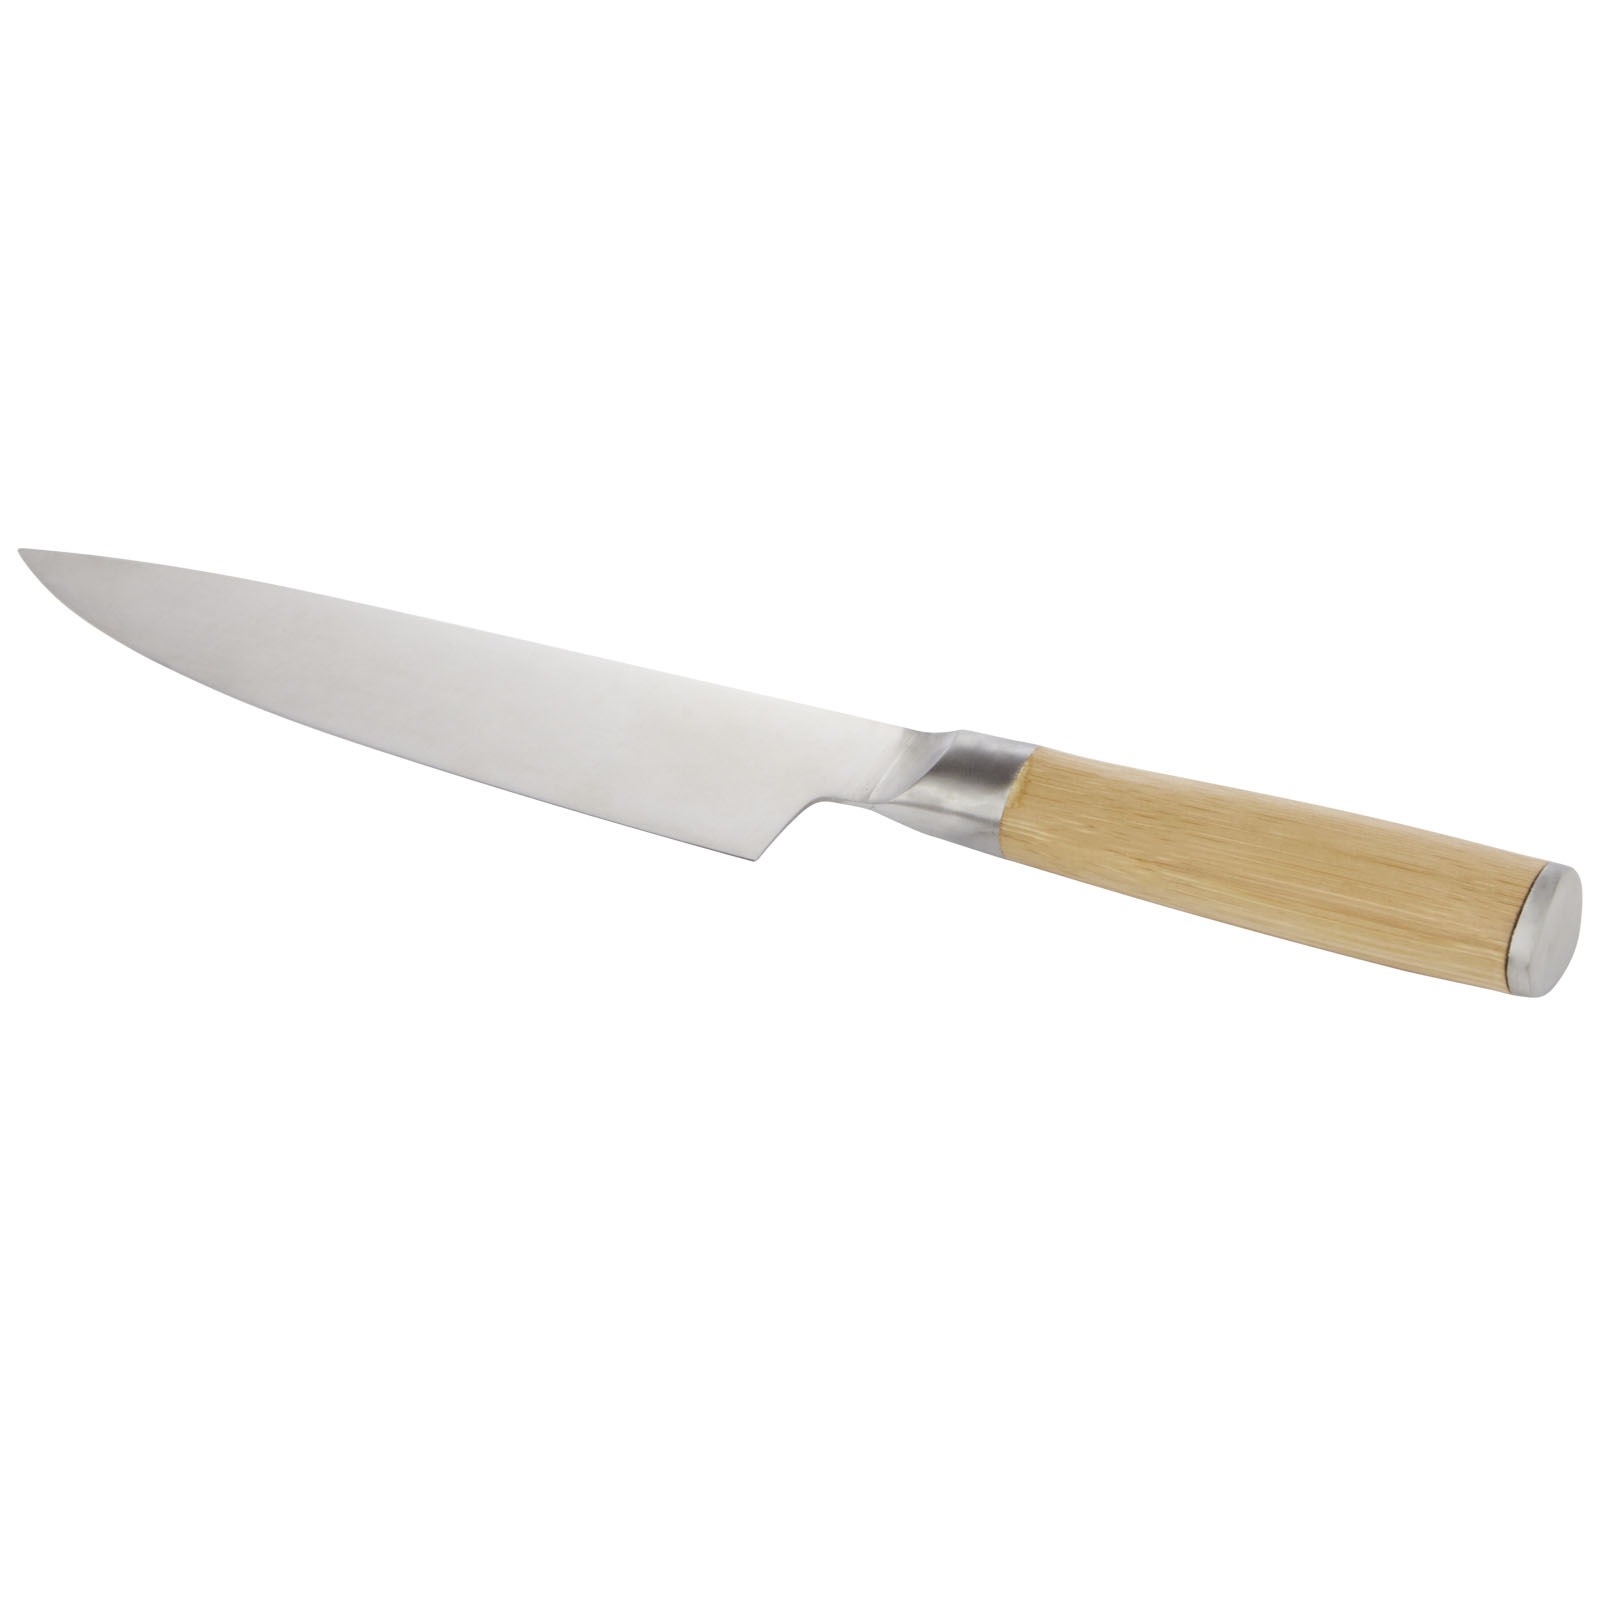 Home & Kitchen - Cocin chef's knife